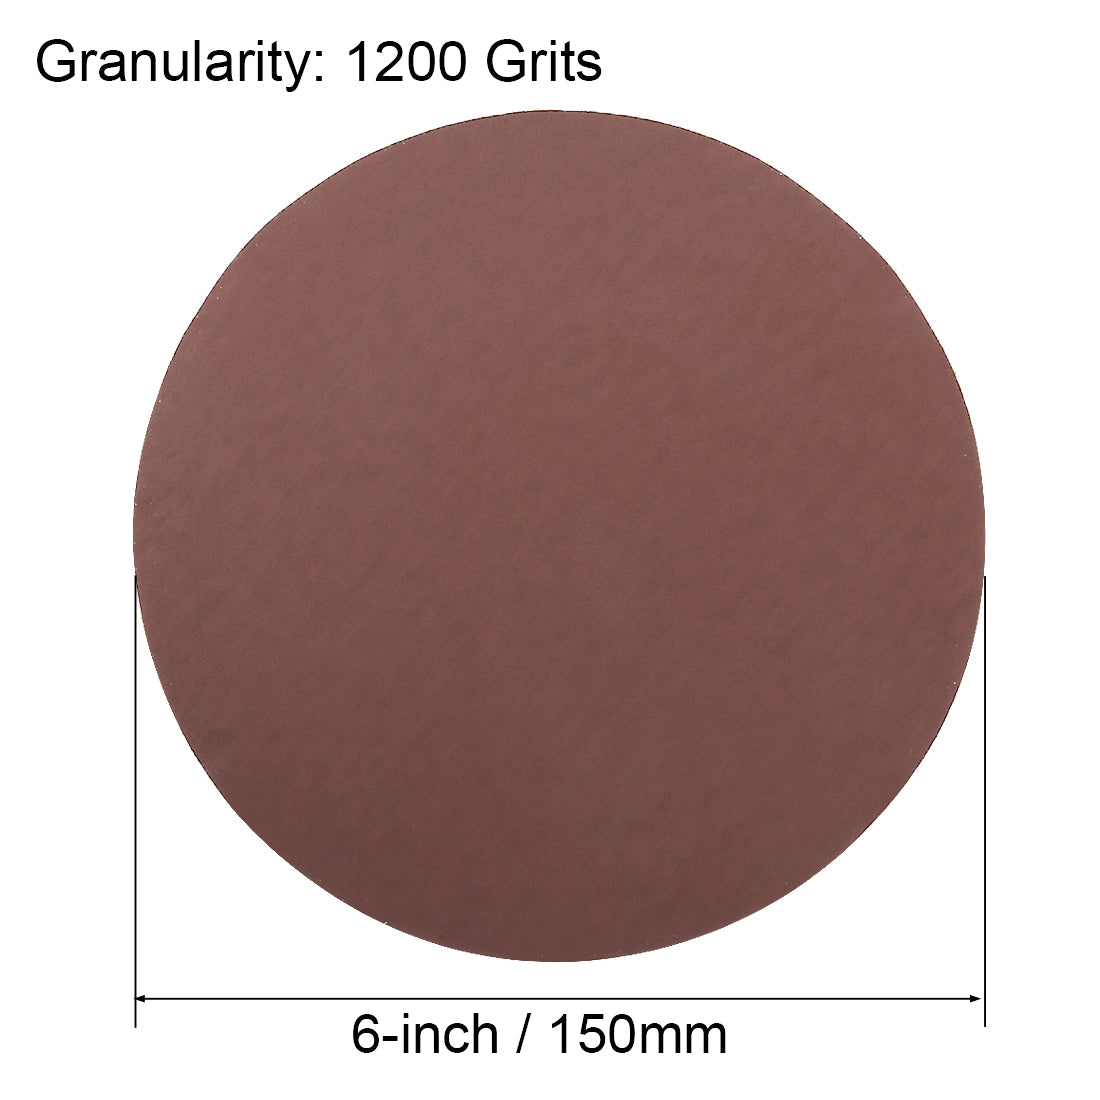 uxcell Uxcell 6-inch 1200-Grits PSA Sanding Disc, Adhesive-Backed Sanding Sheets Aluminum Oxide Sandpaper for Random Orbital Sander 20pcs